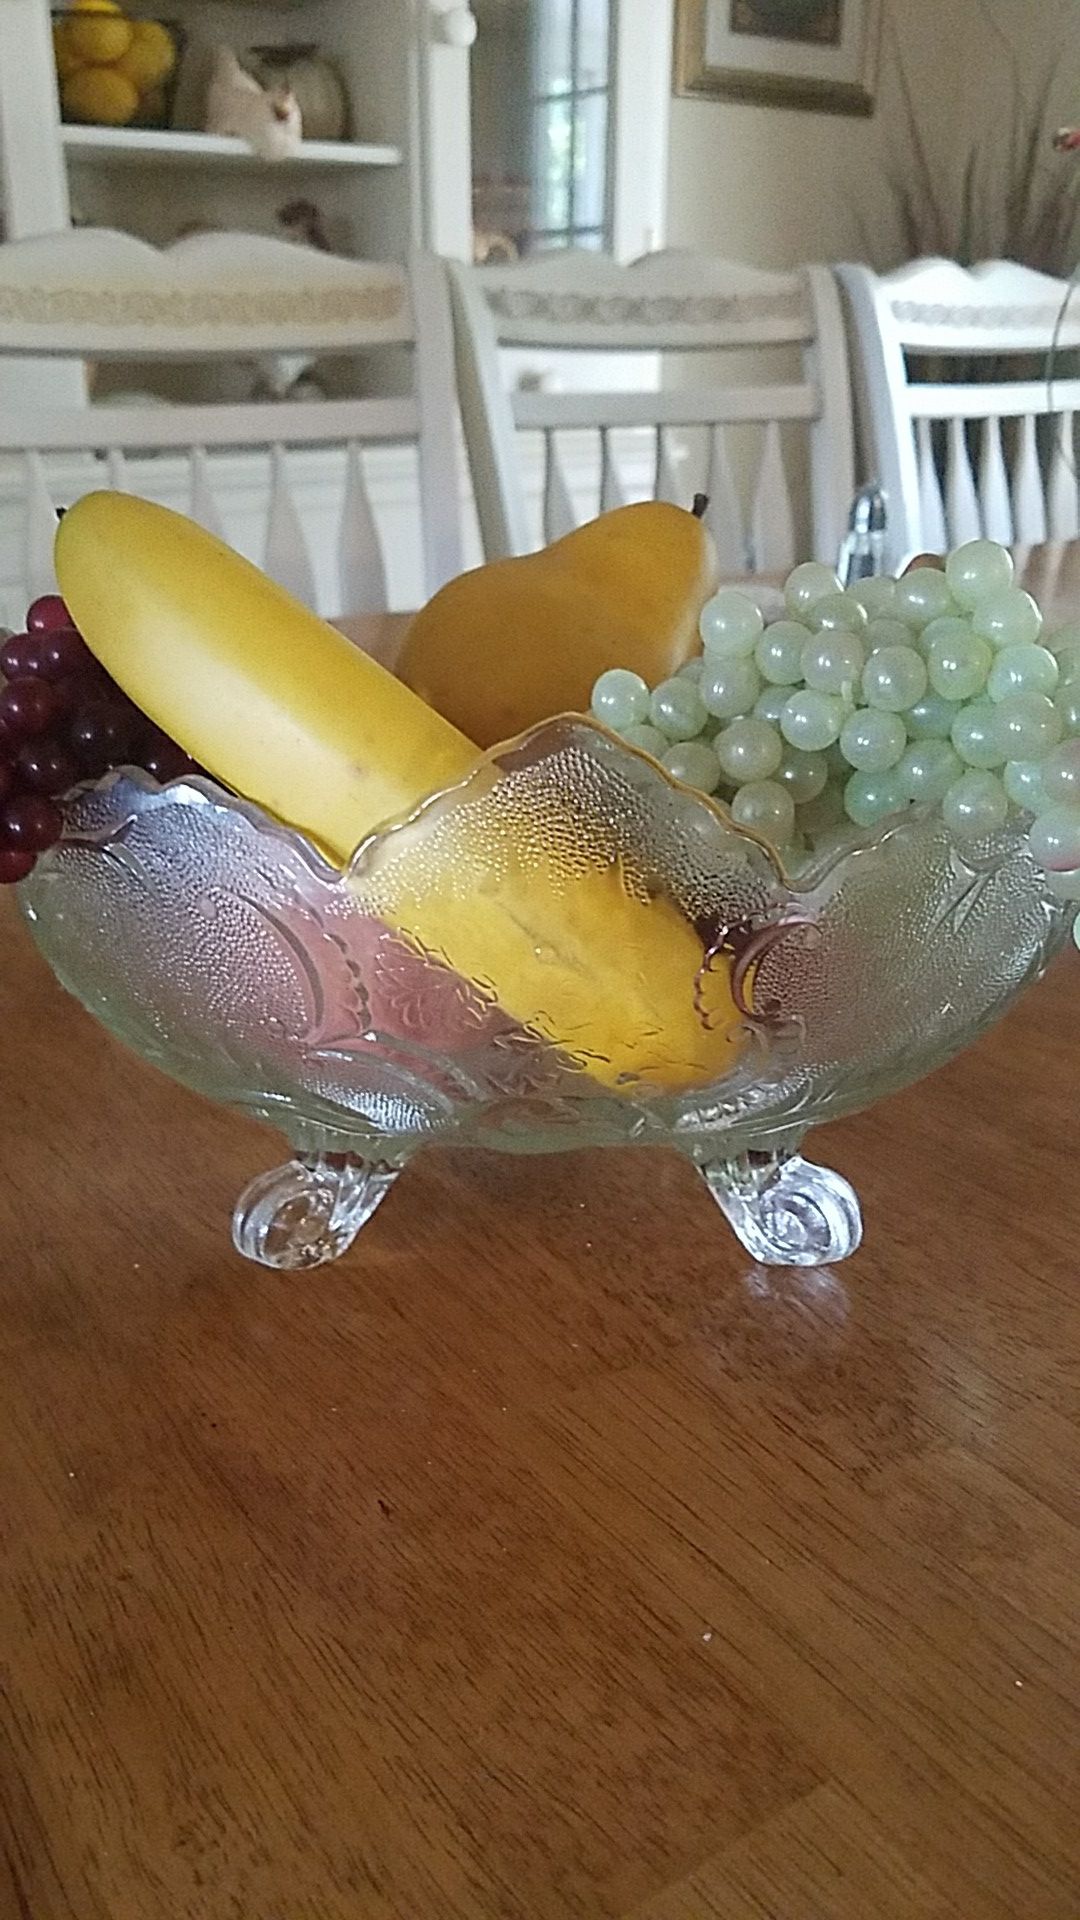 Fruit bowl and fake fruit